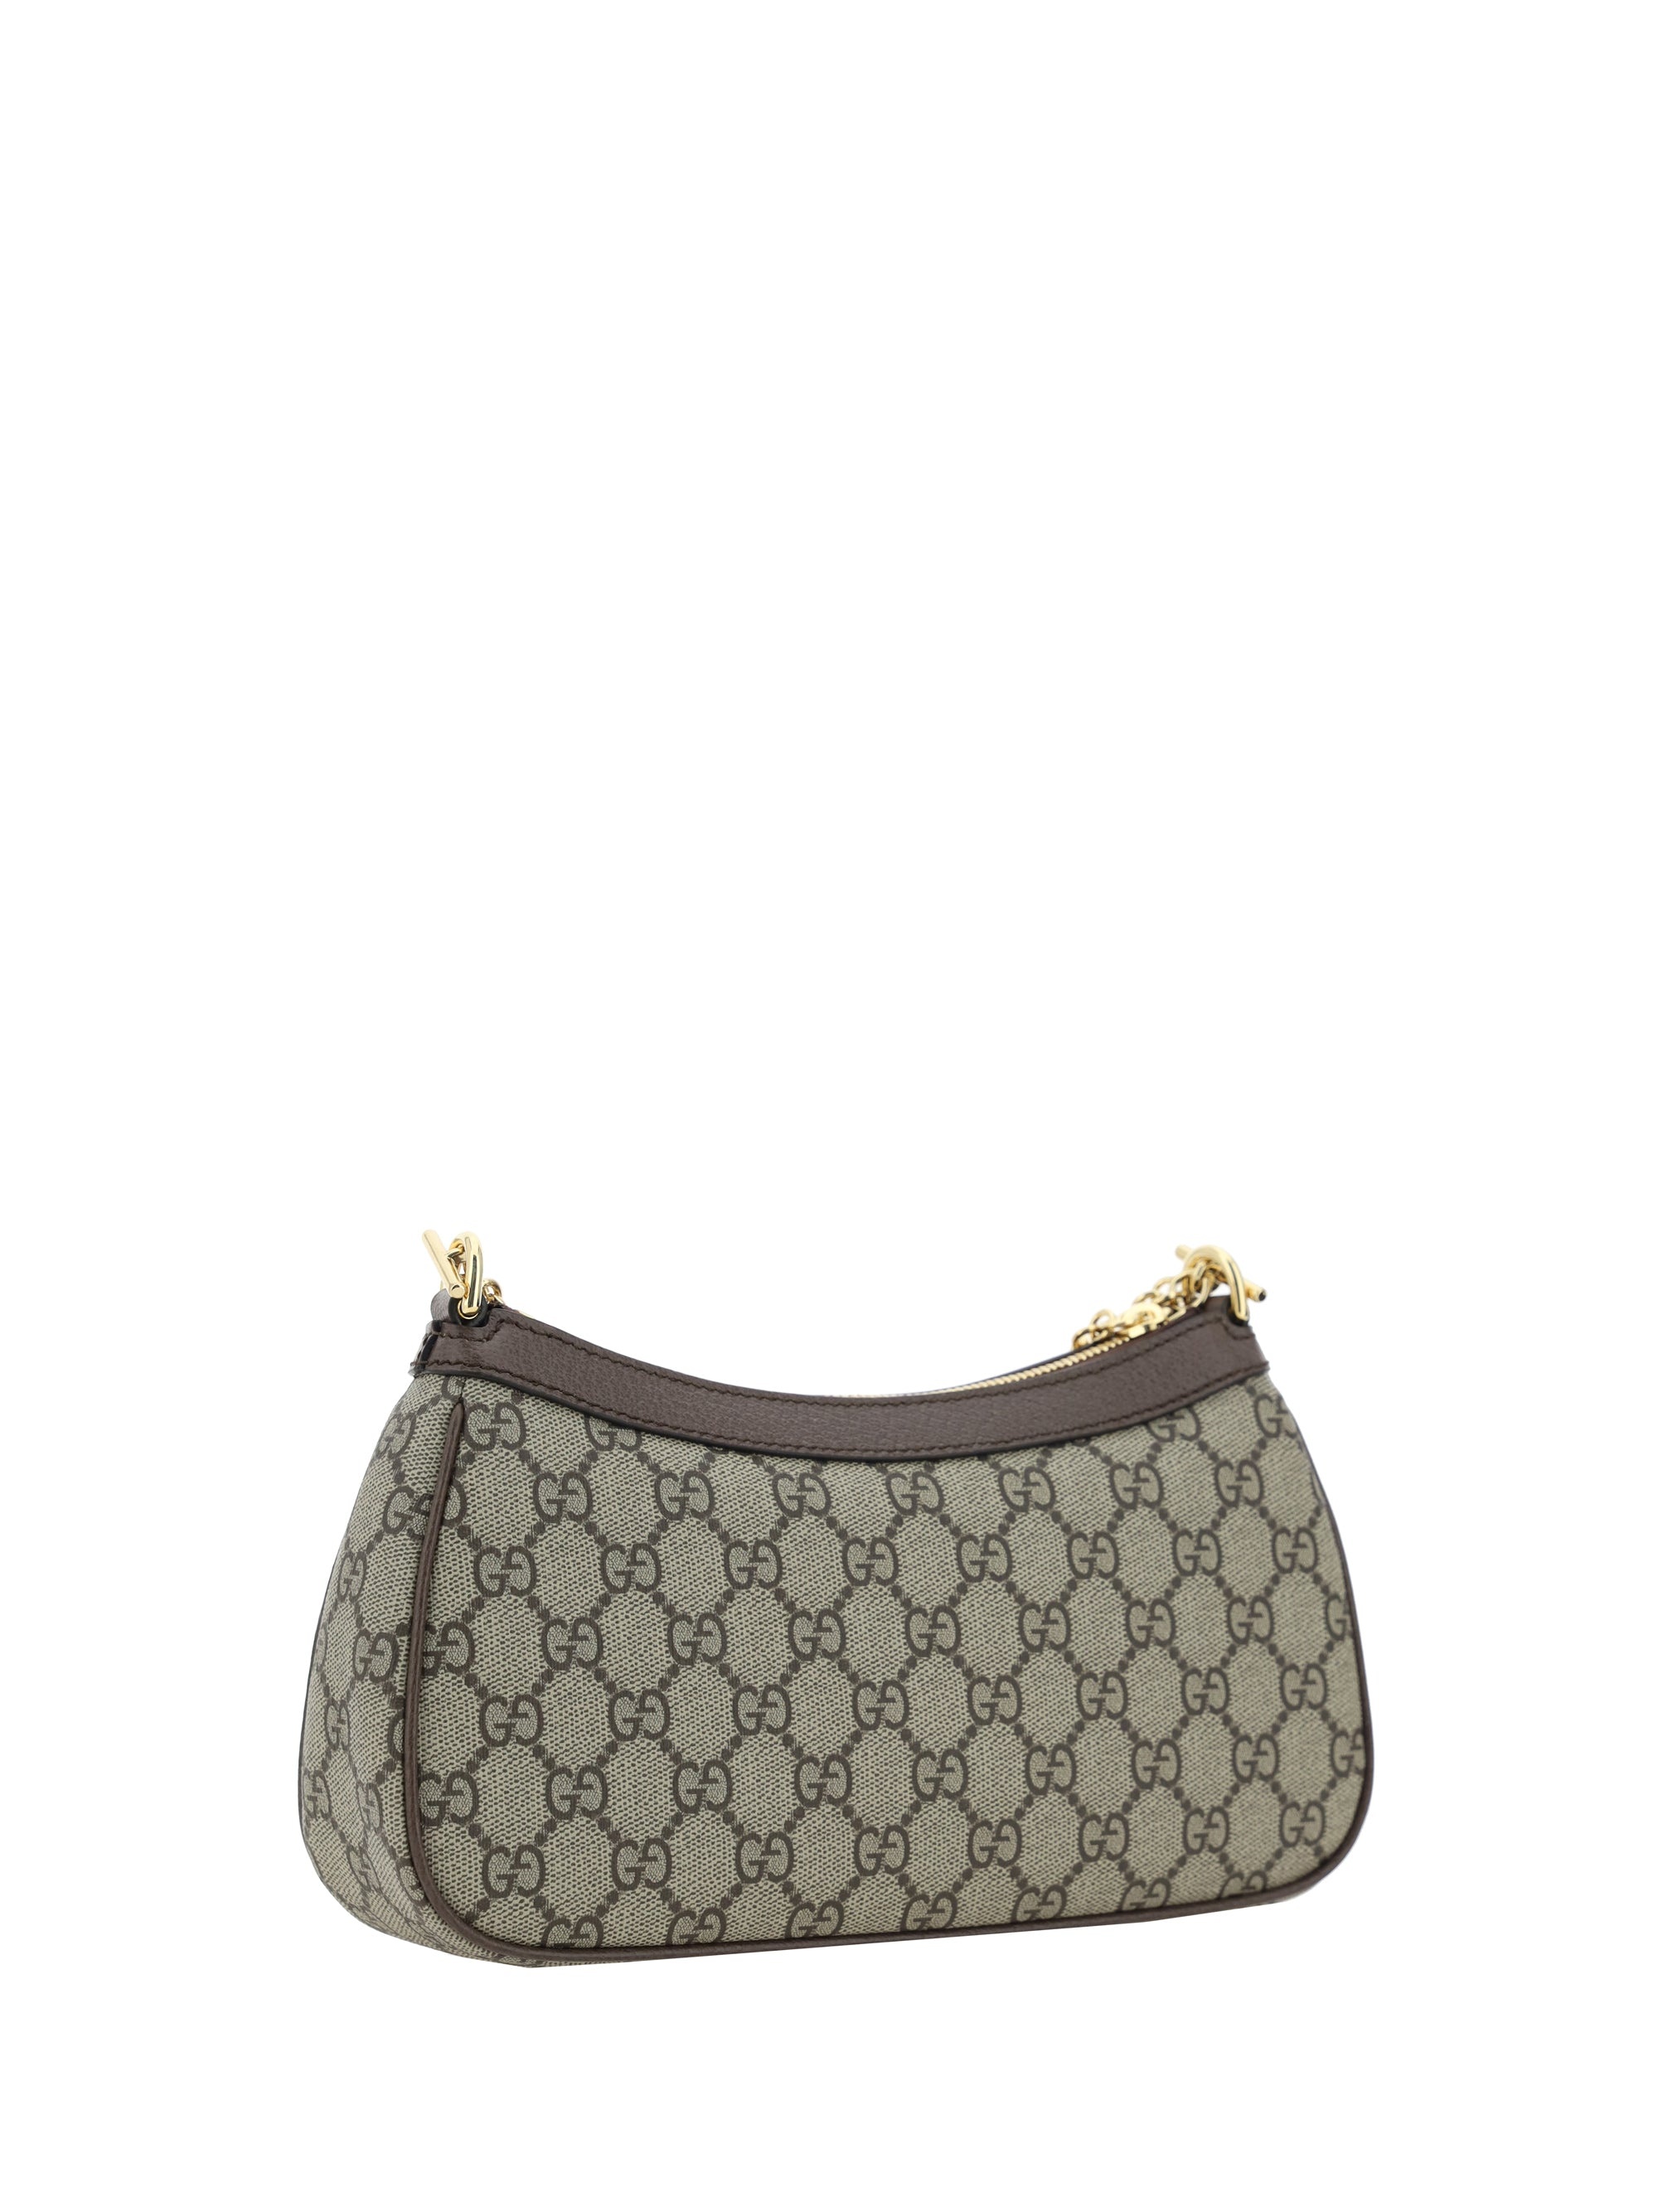 Gucci Women Ophidia Shoulder Bag - 3